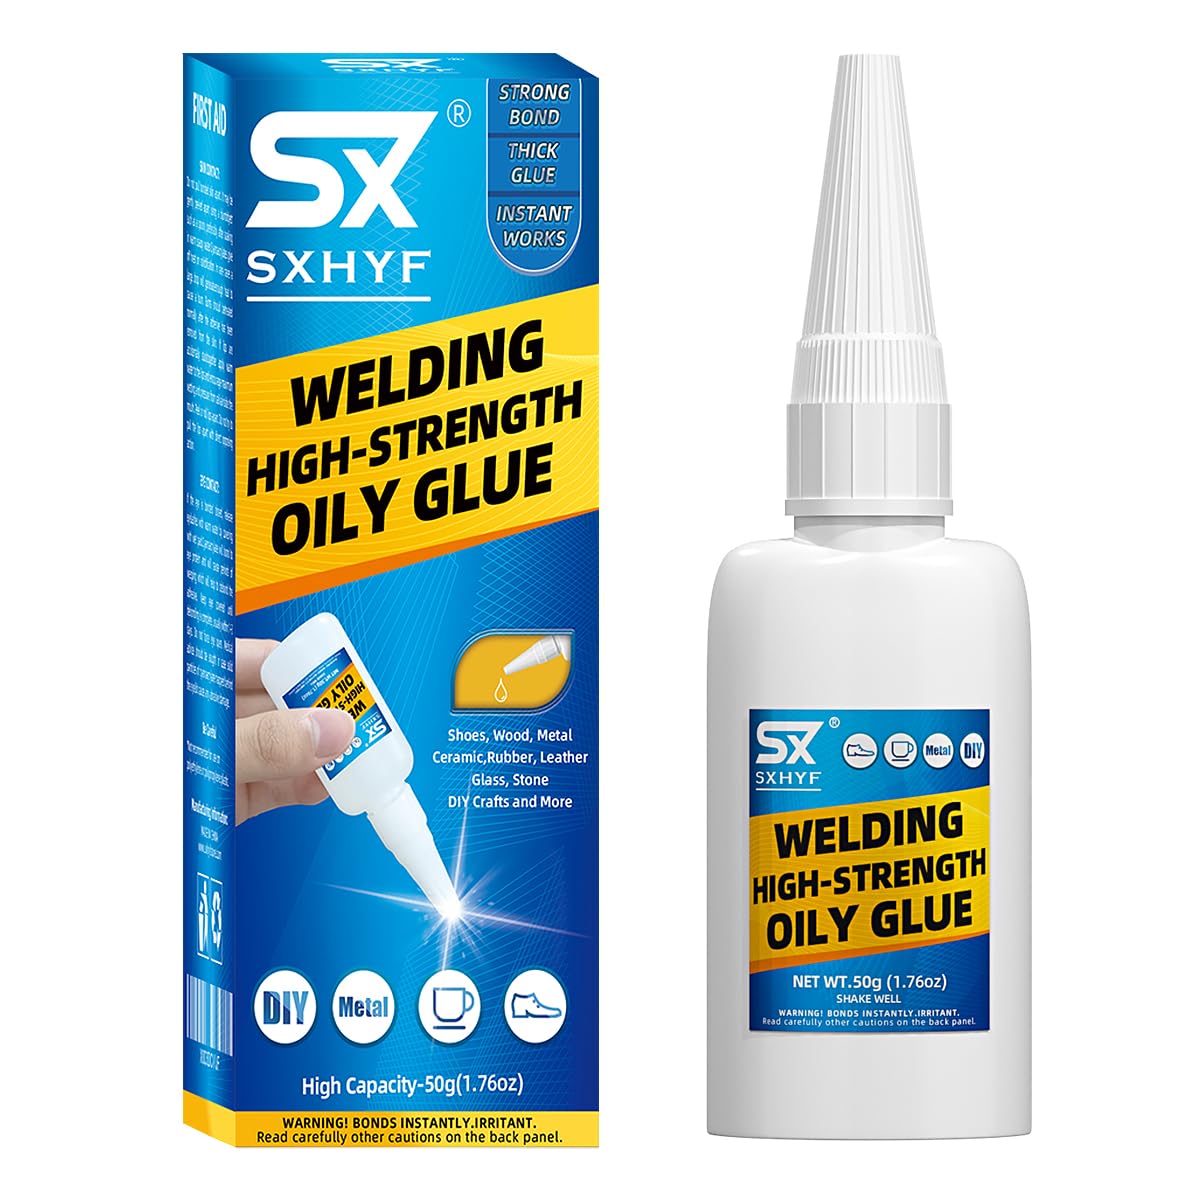 SXhyf Welding High-Strength Oily Glue